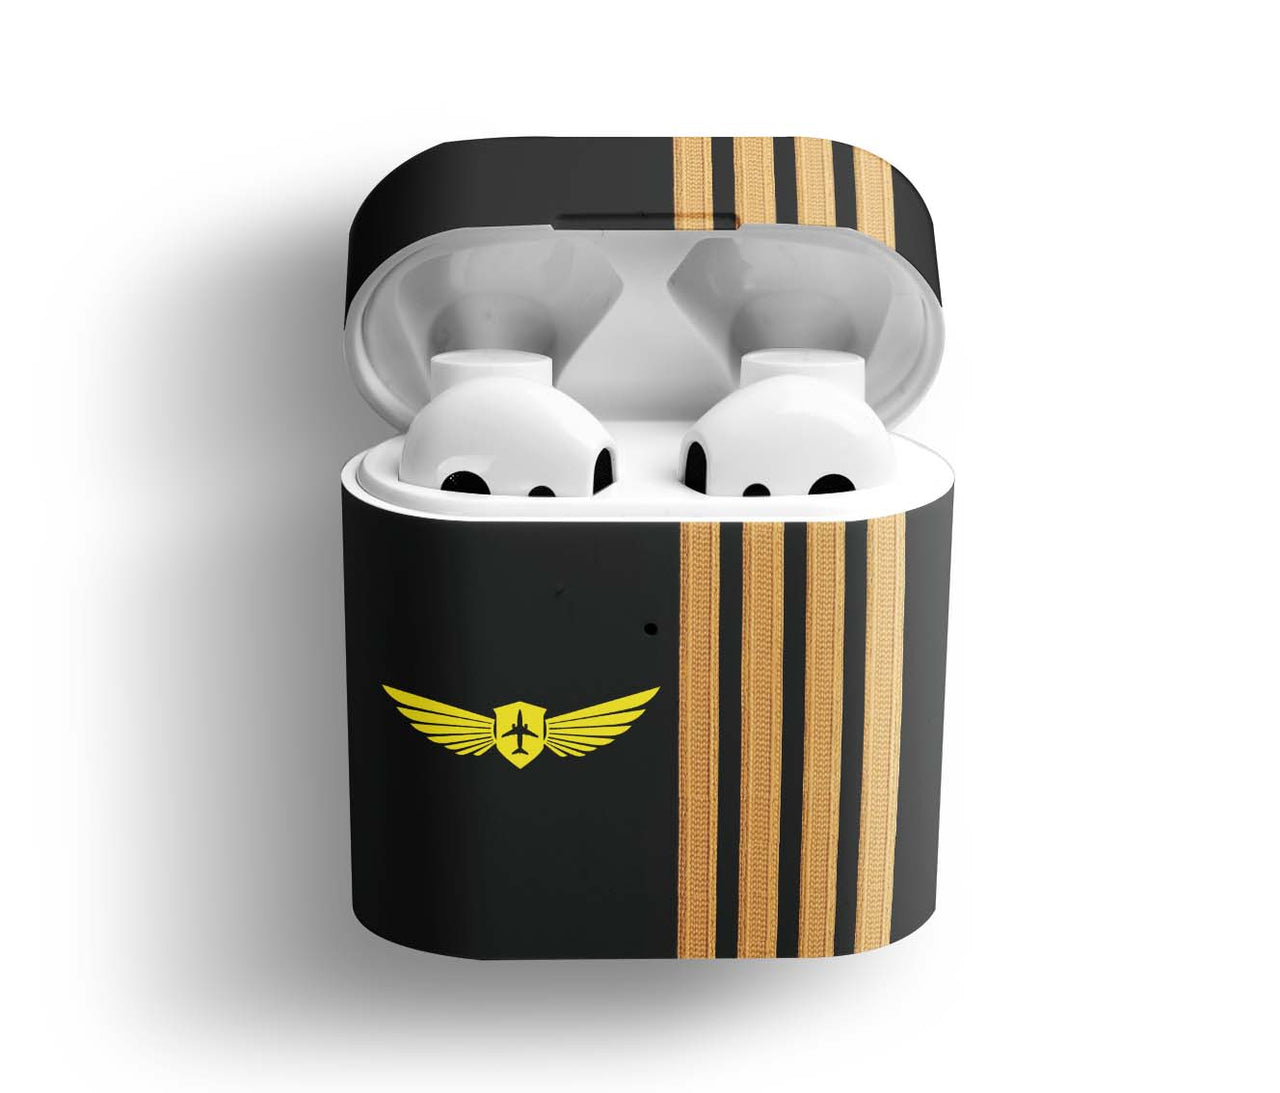 Pilot Badge & Special Golden Epaulettes (4,3,2 Lines) Designed AirPods  Cases